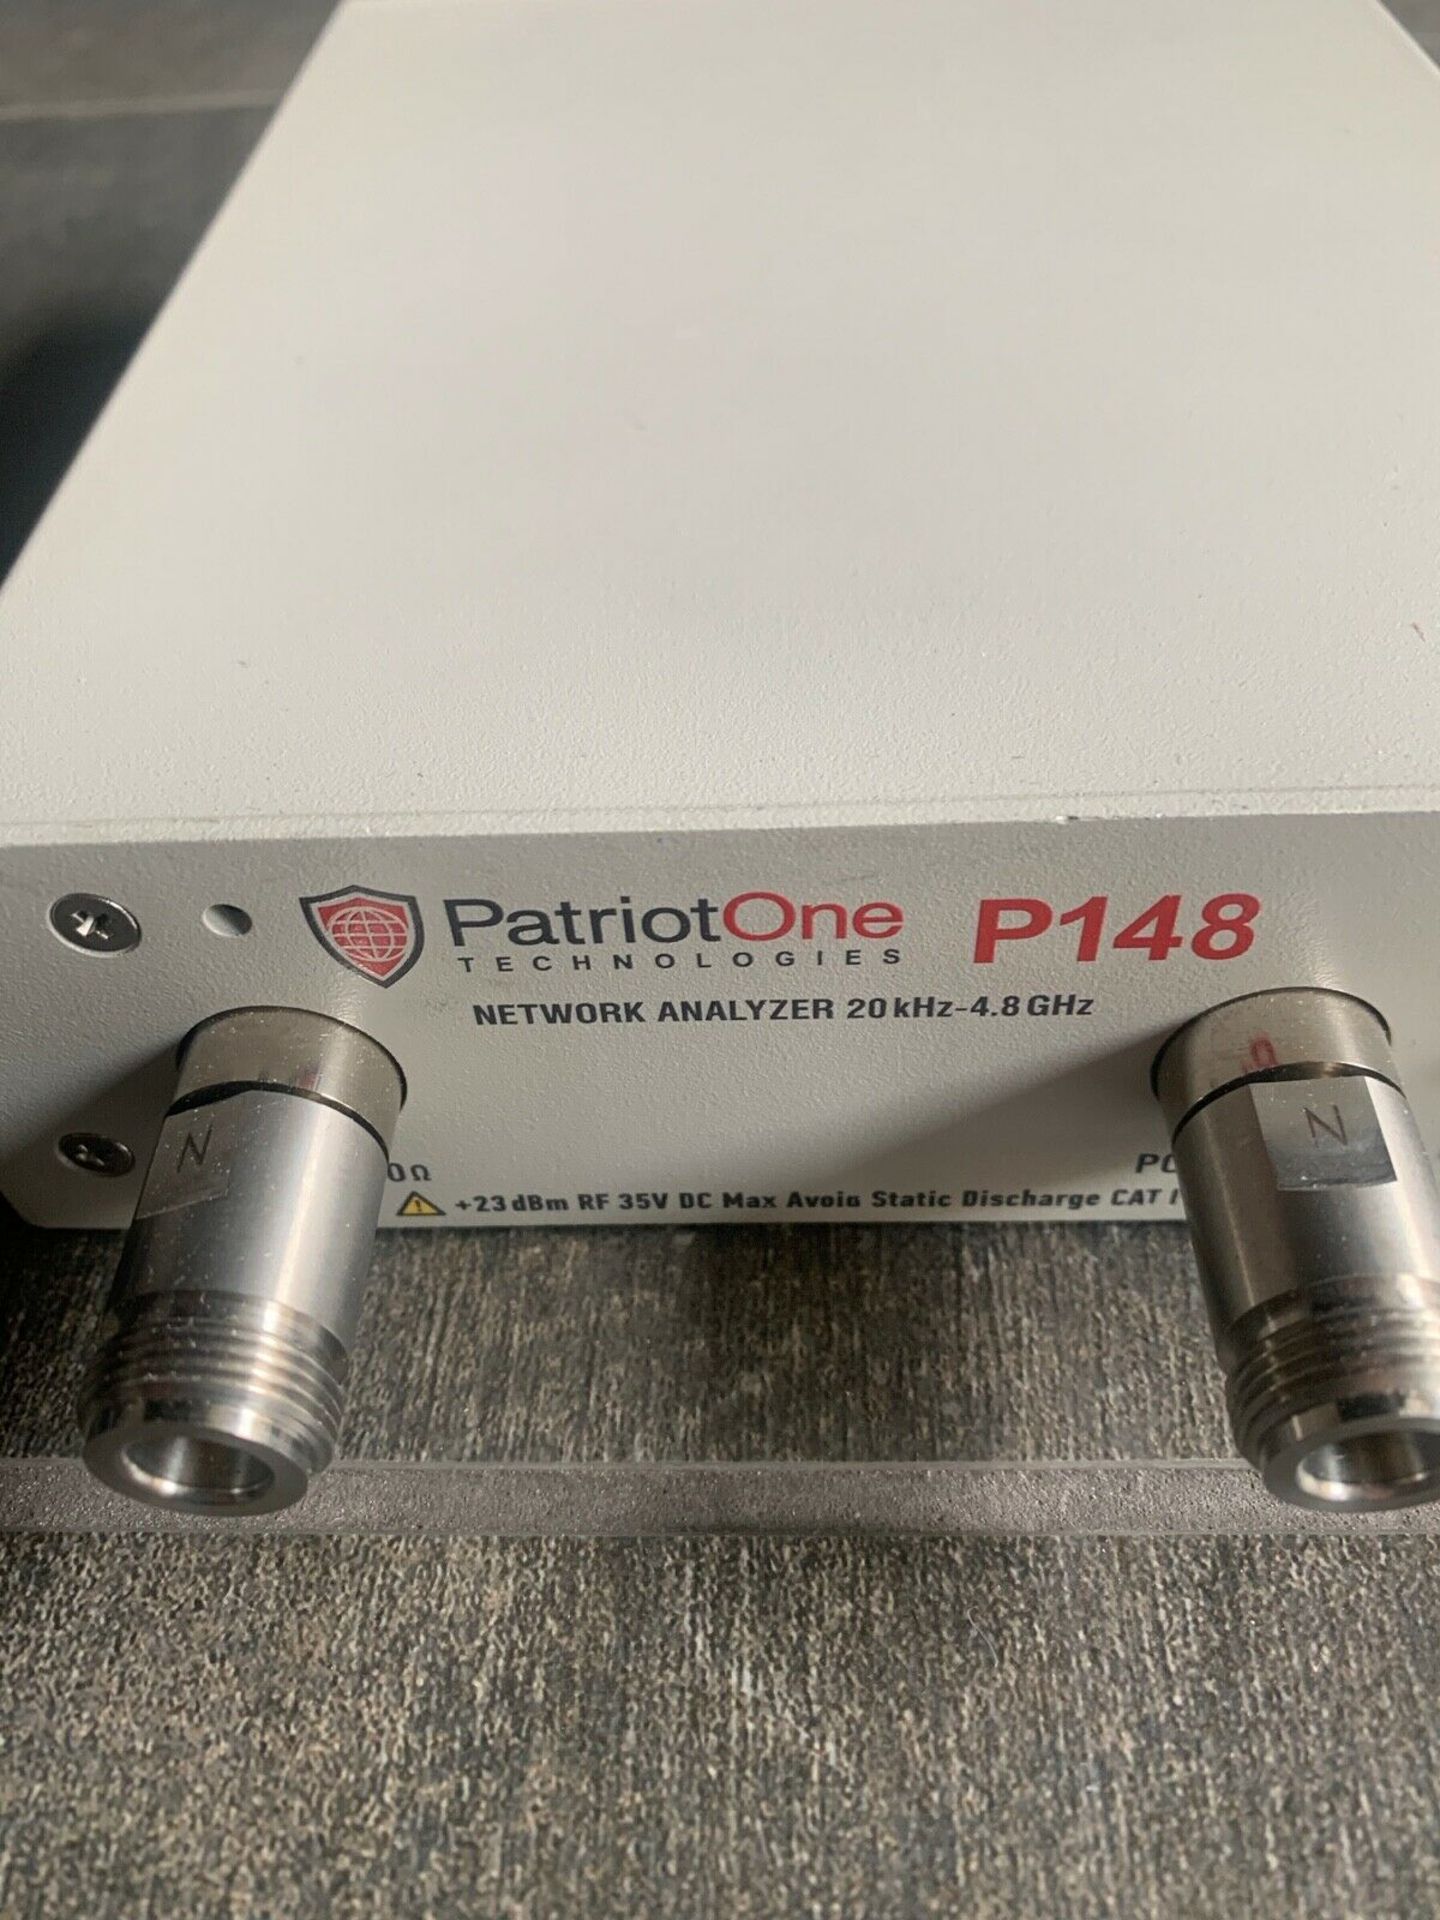 Patriot One Technologies P148 Concealed Weapon Detection System Network Analyzer $10,000 retail - Bild 3 aus 4